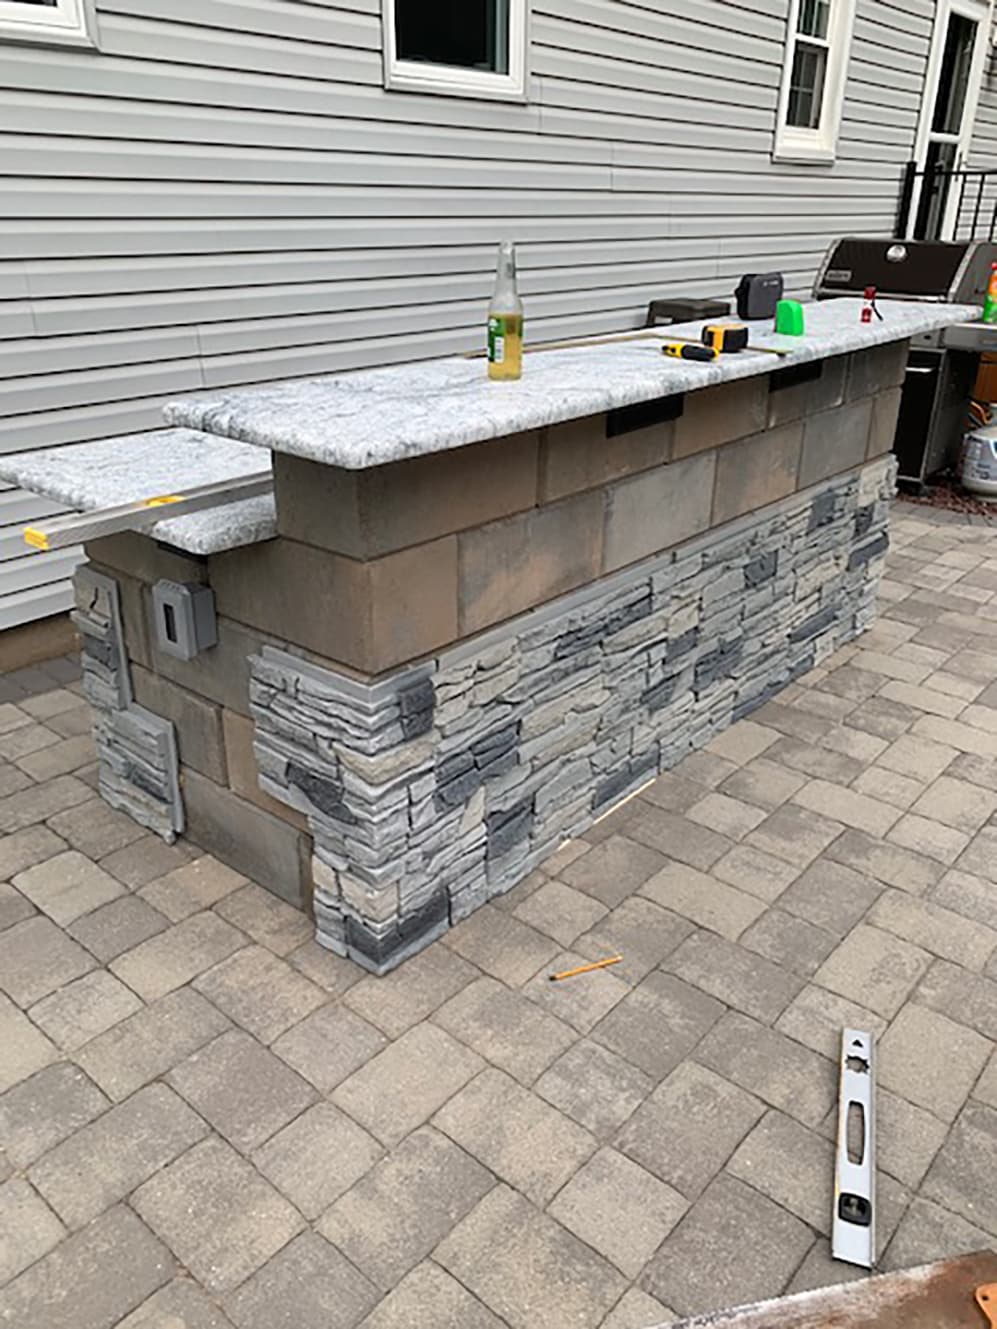 Patio bar, DIY stone bar, Outdoor bar